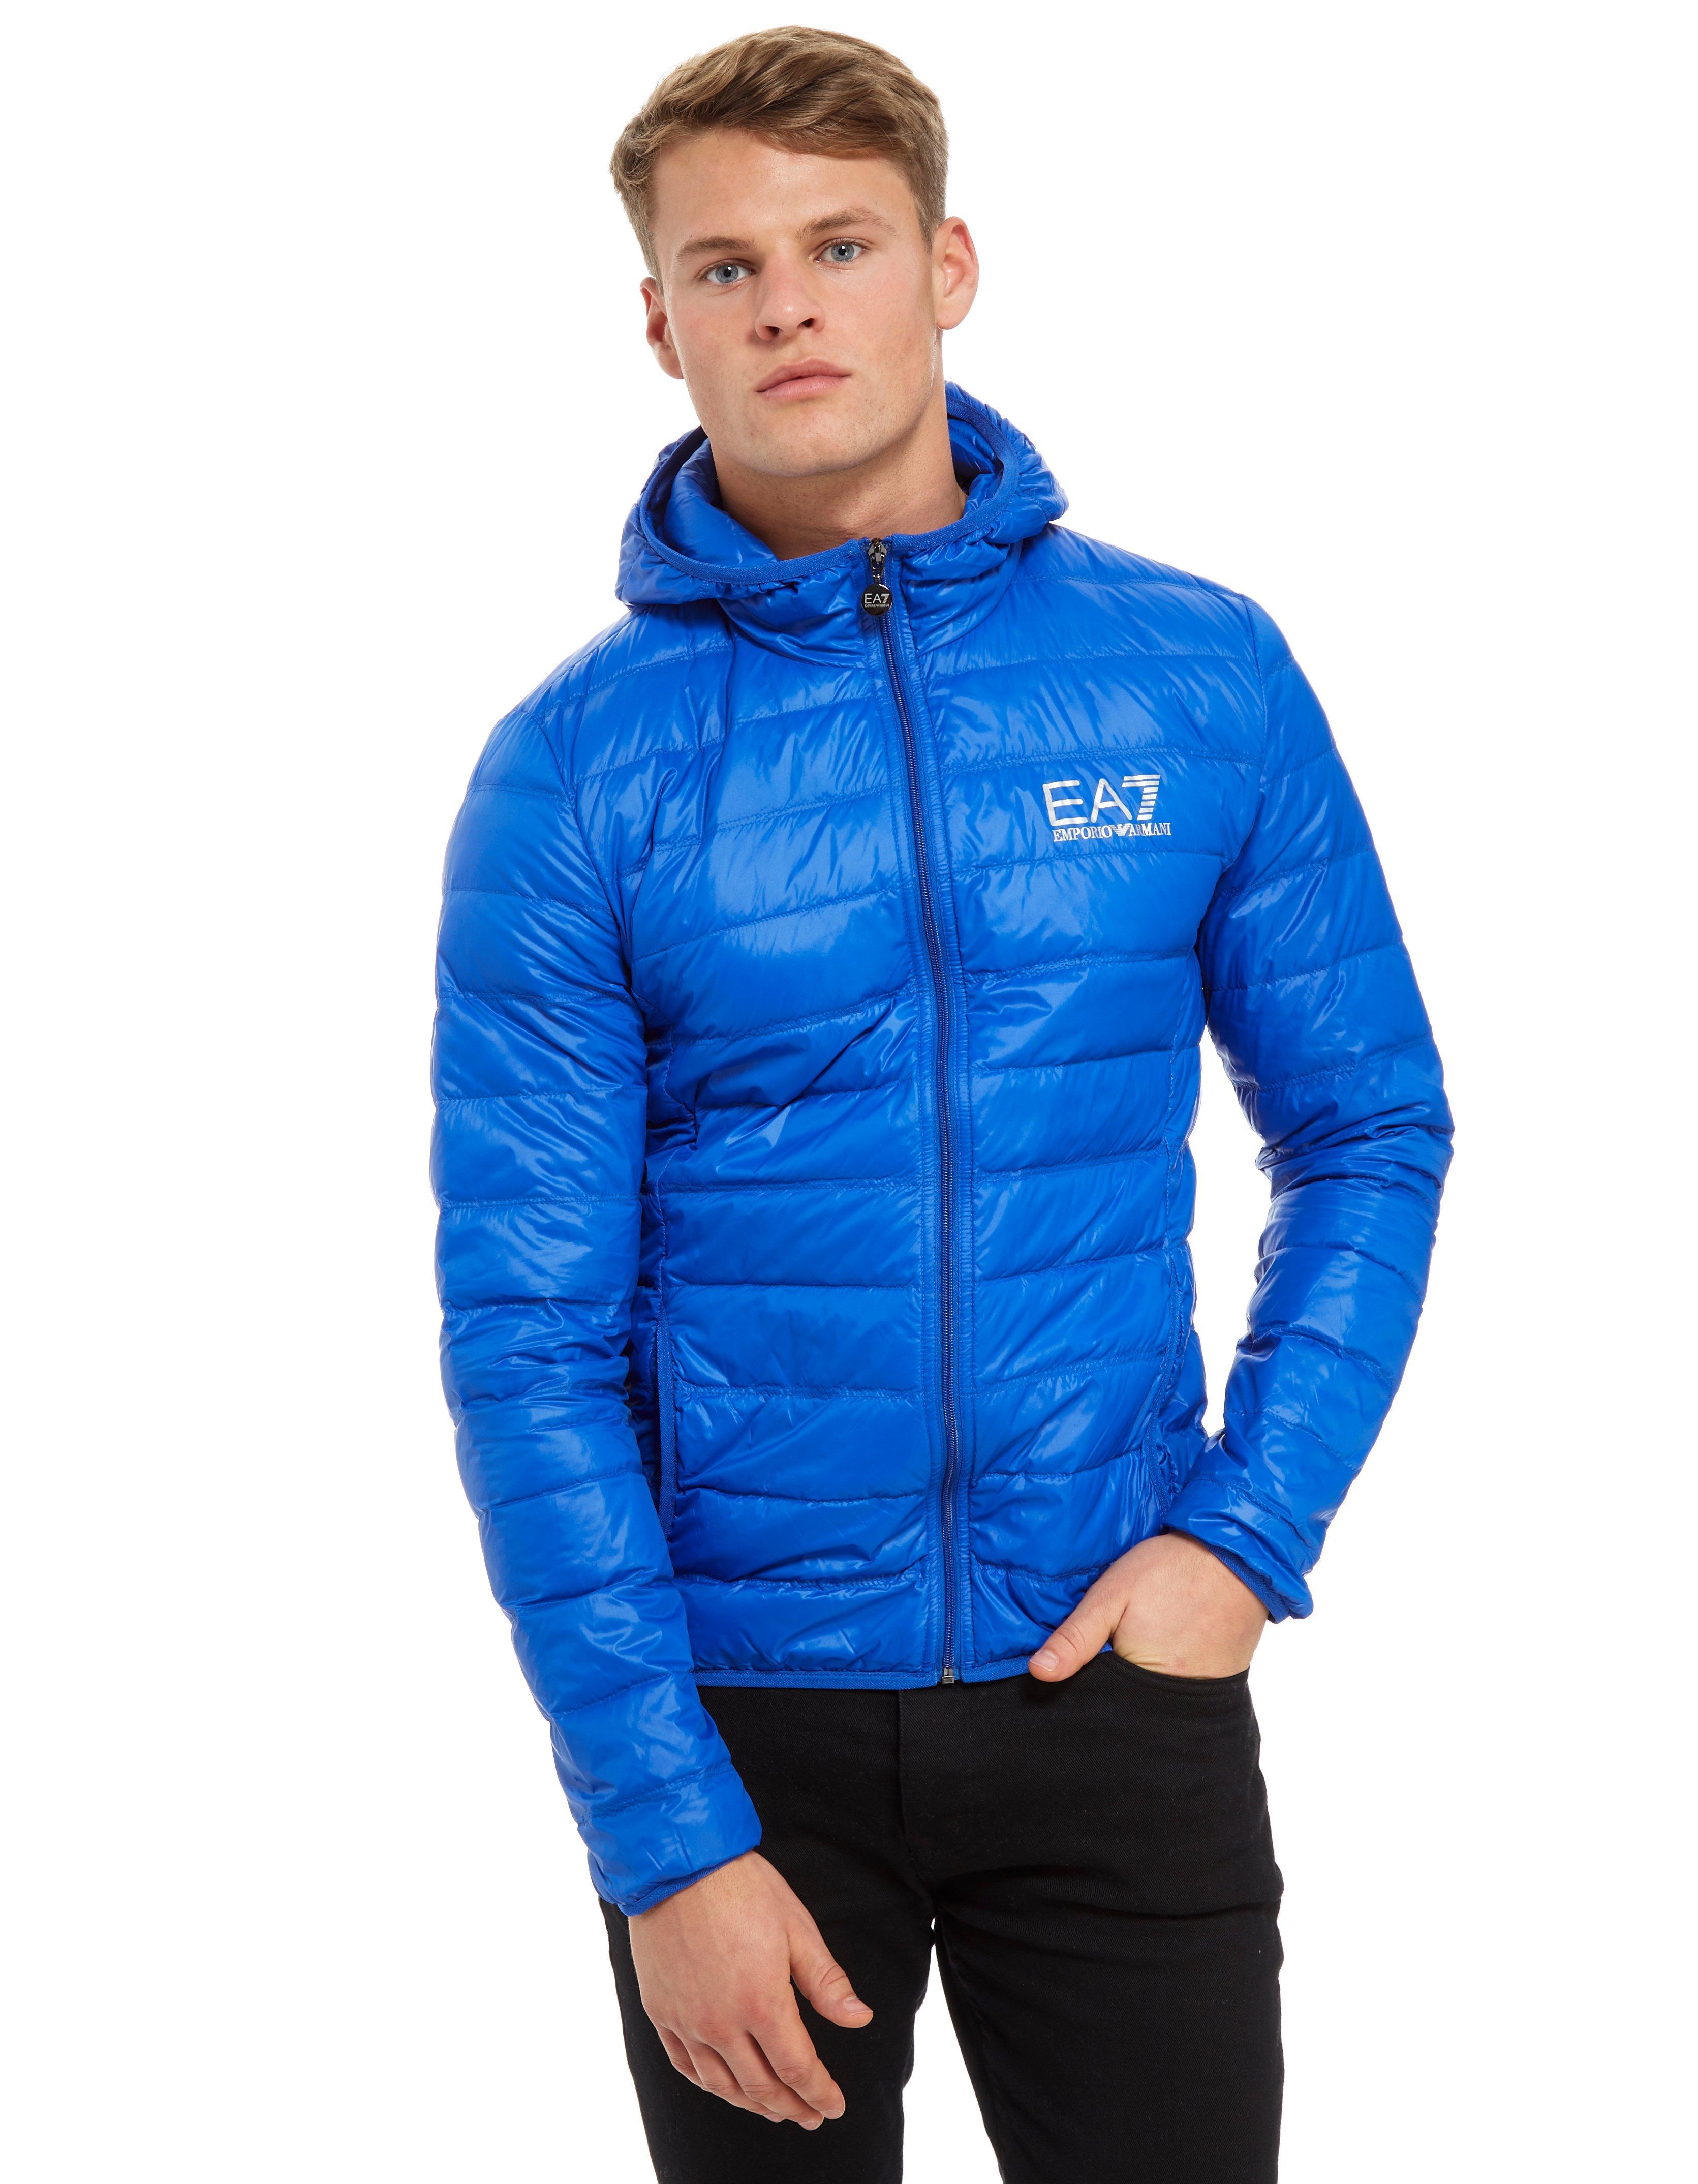 blue ea7 jacket - 62% OFF - awi.com